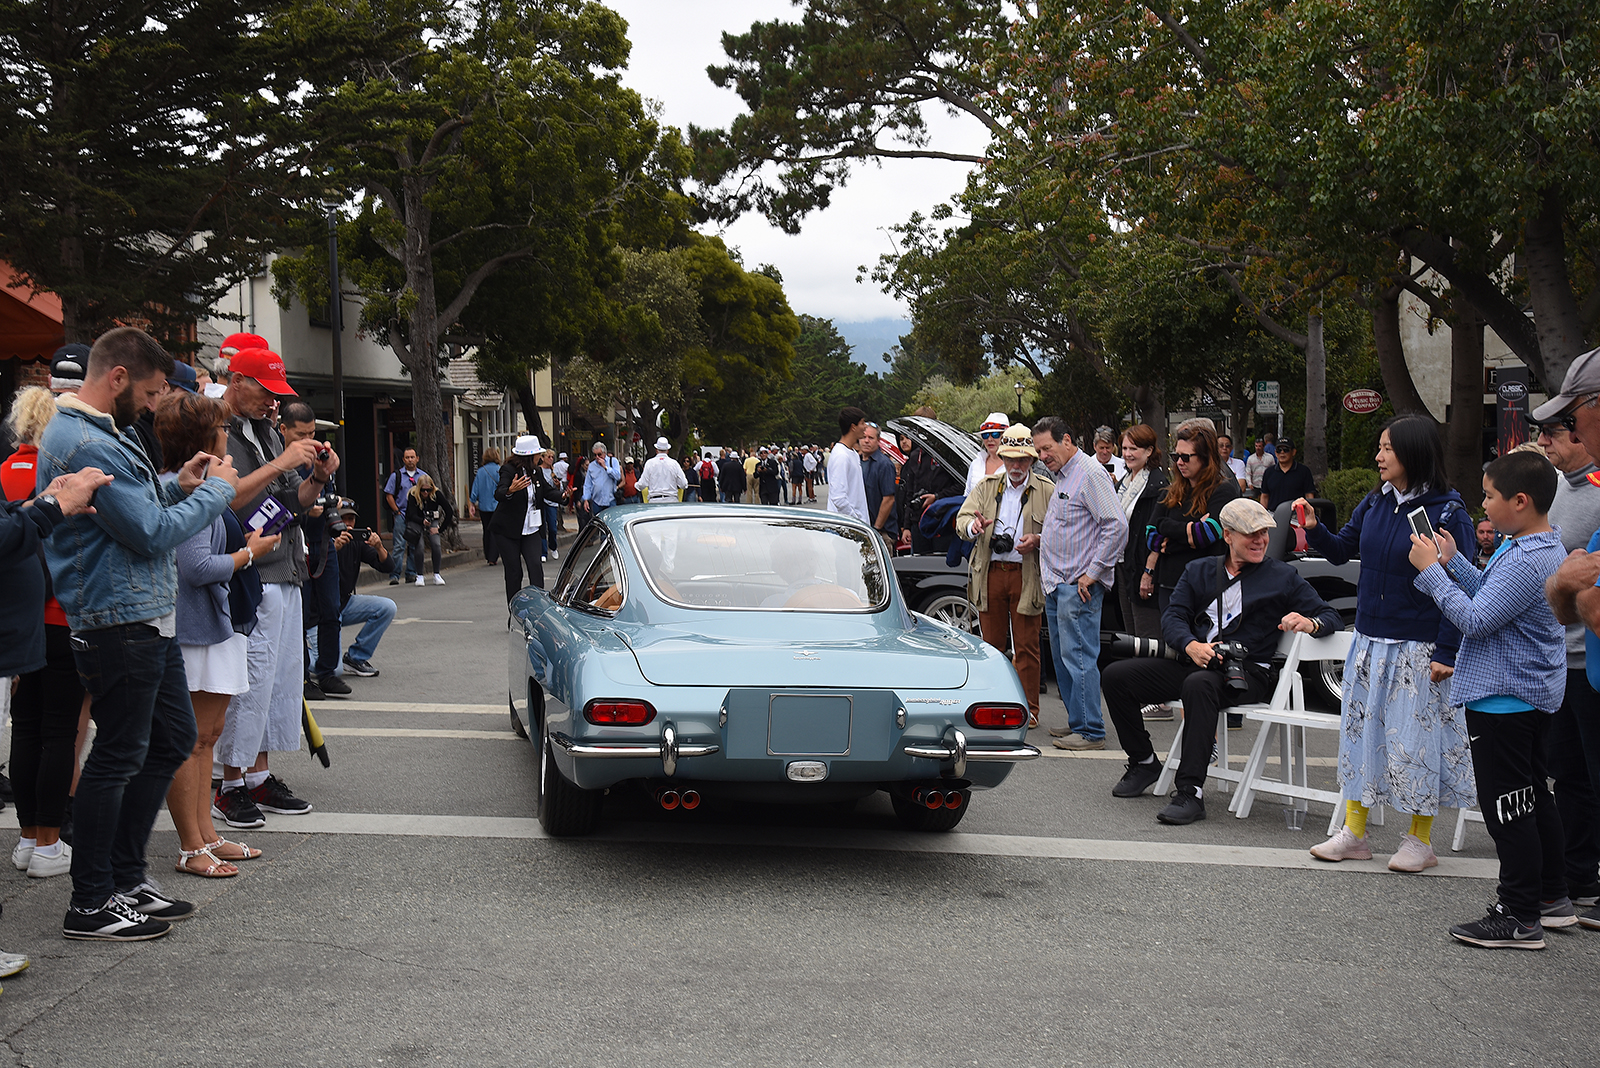 Classic & Sports Car – Local Lamborghini stars at Carmel concours